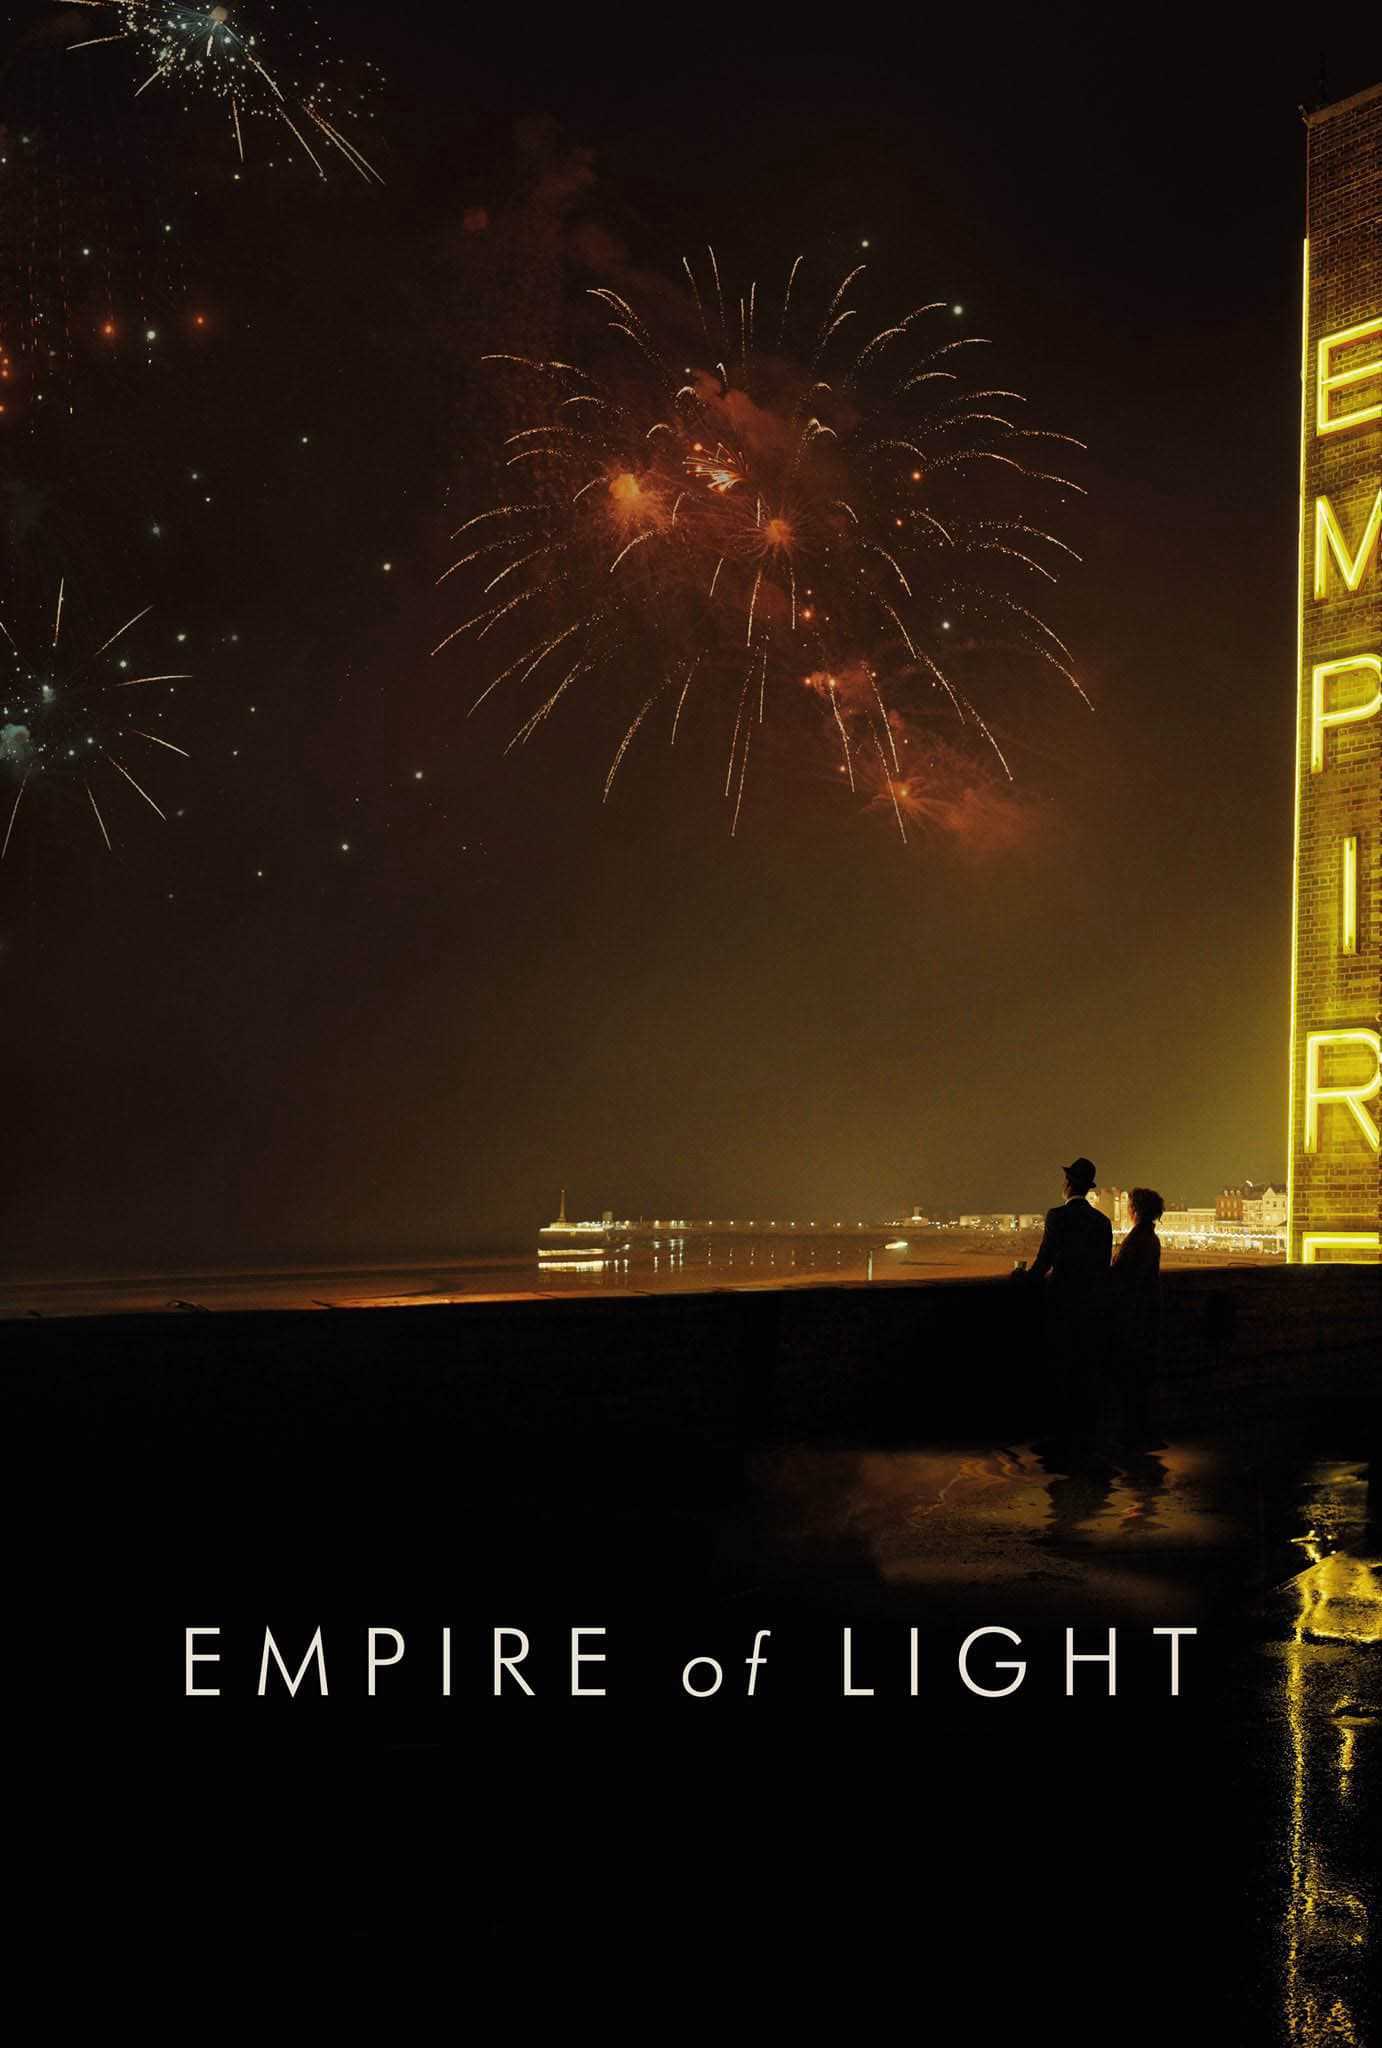 Empire of light - Empire of light